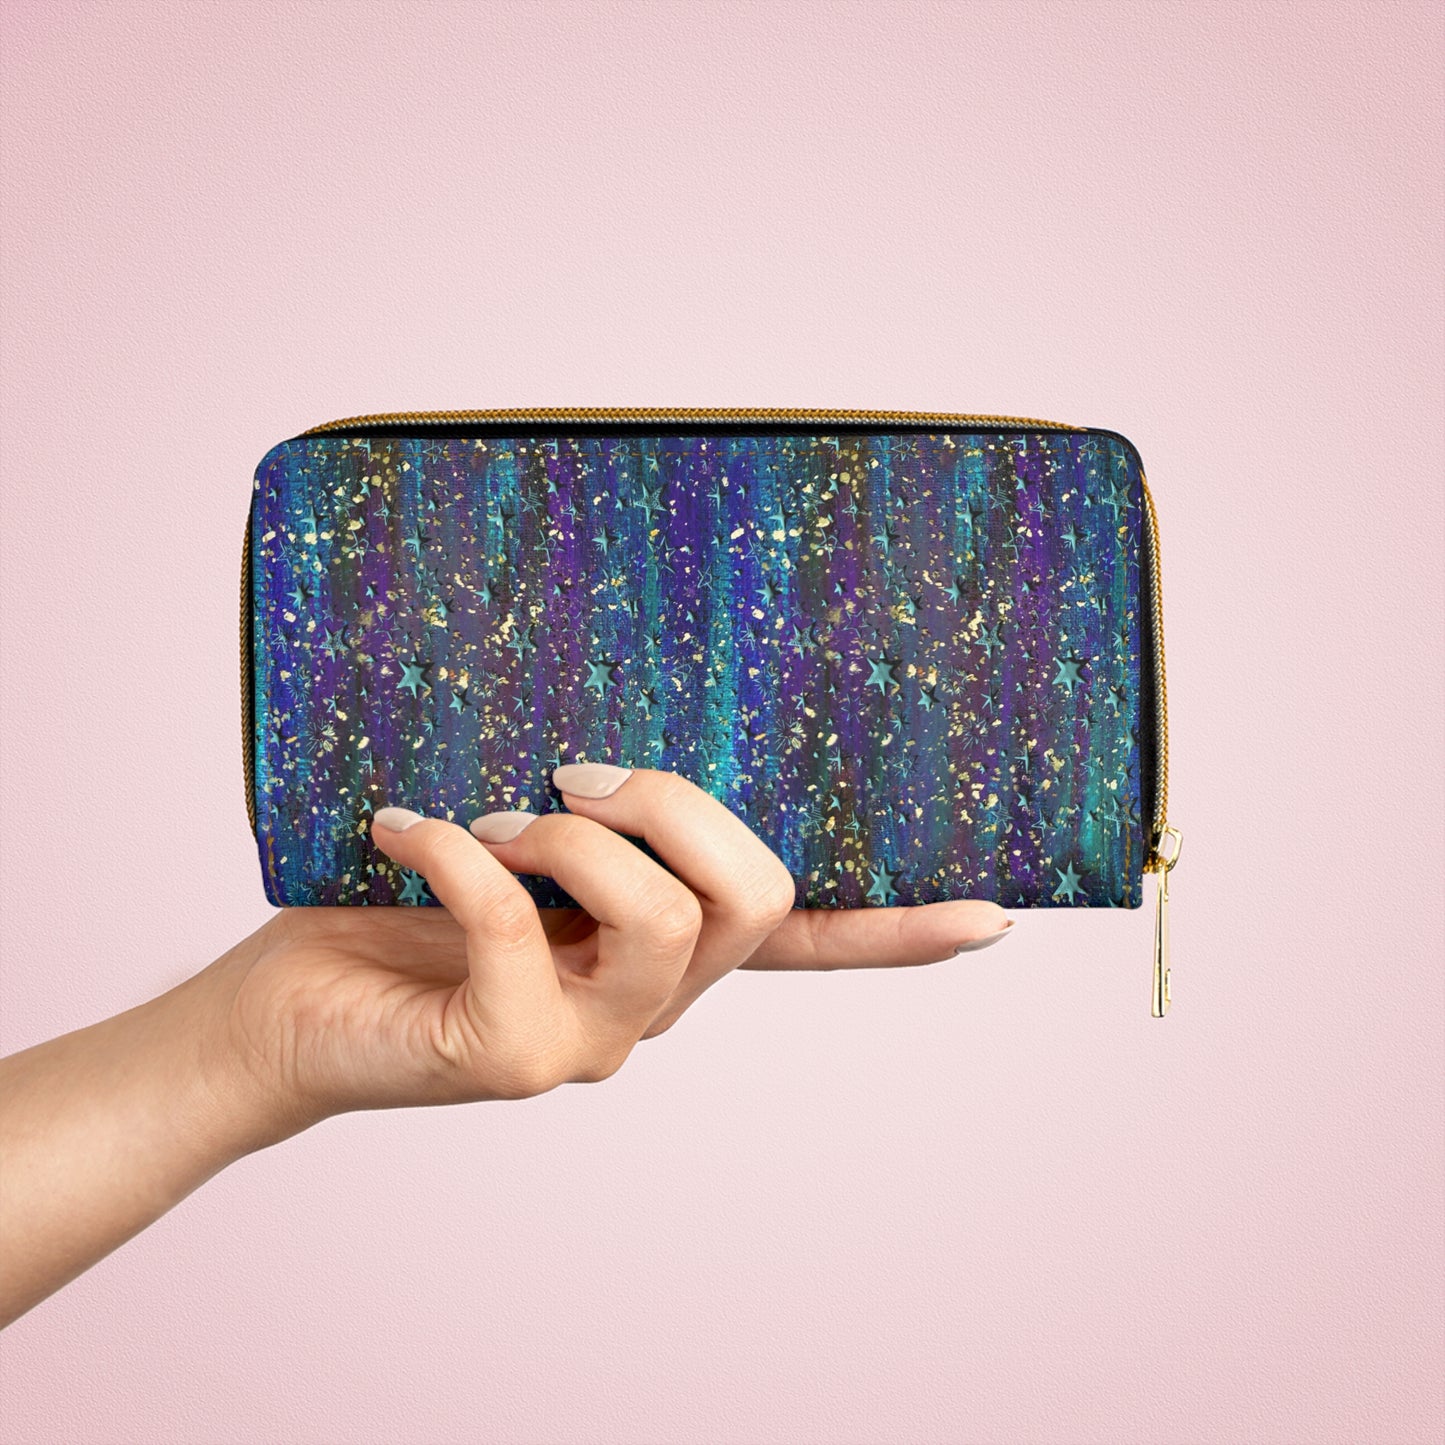 Celestial Dreams Galaxy Zipper Wallet